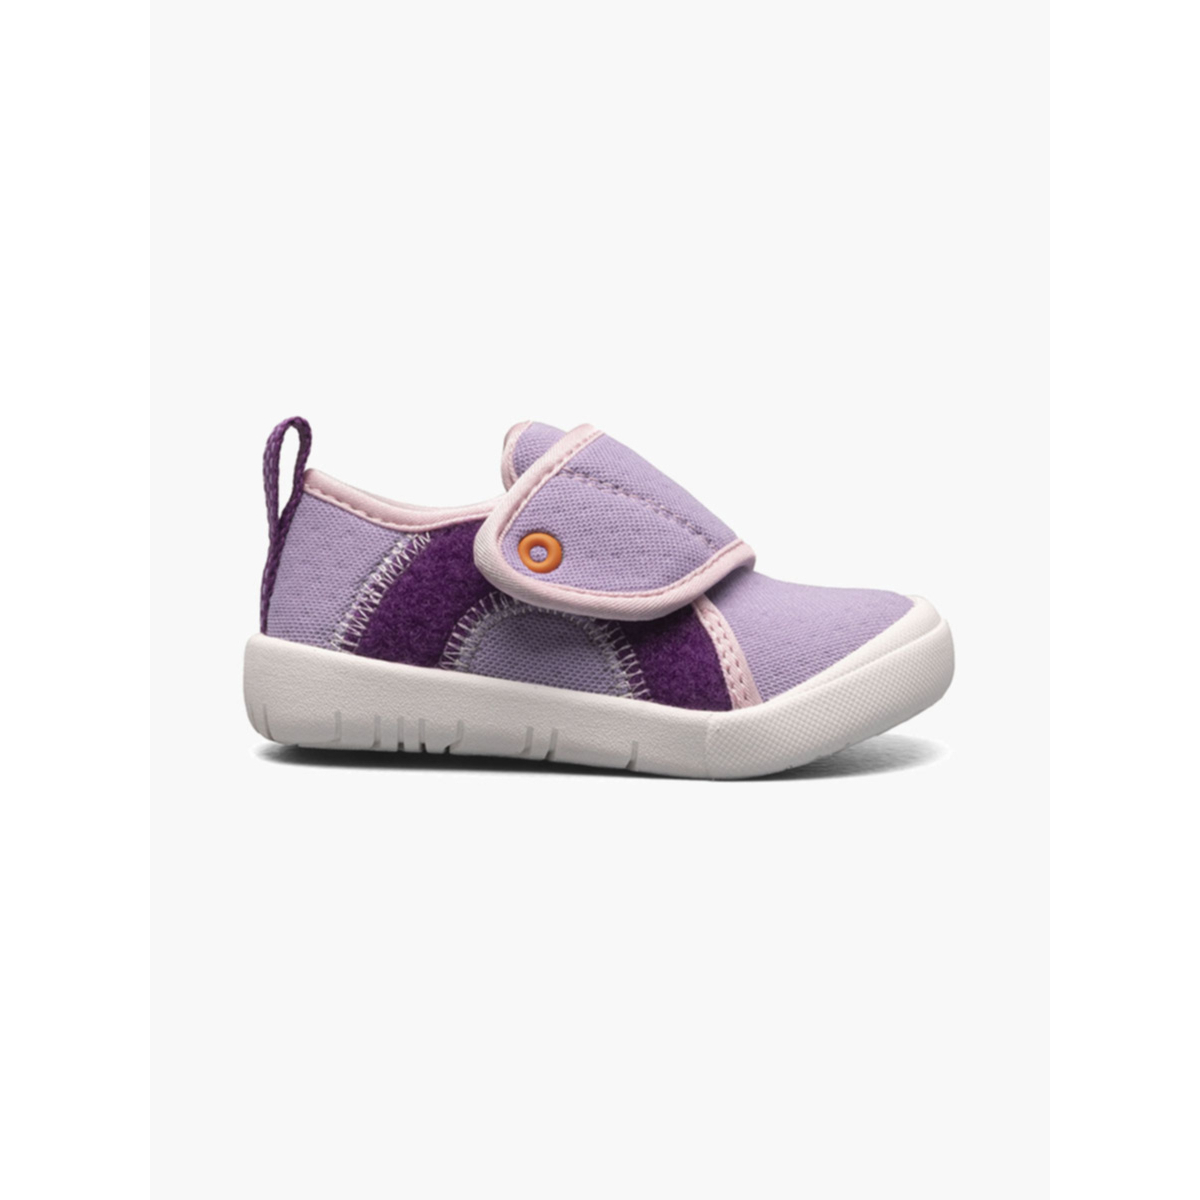 BOGS Unisex Baby Kicker Hook And Loop Shoe Sneaker Lavender Multi - 72811I-541 1 LAVENDER MULTI - LAVENDER MULTI, 9 Little KId